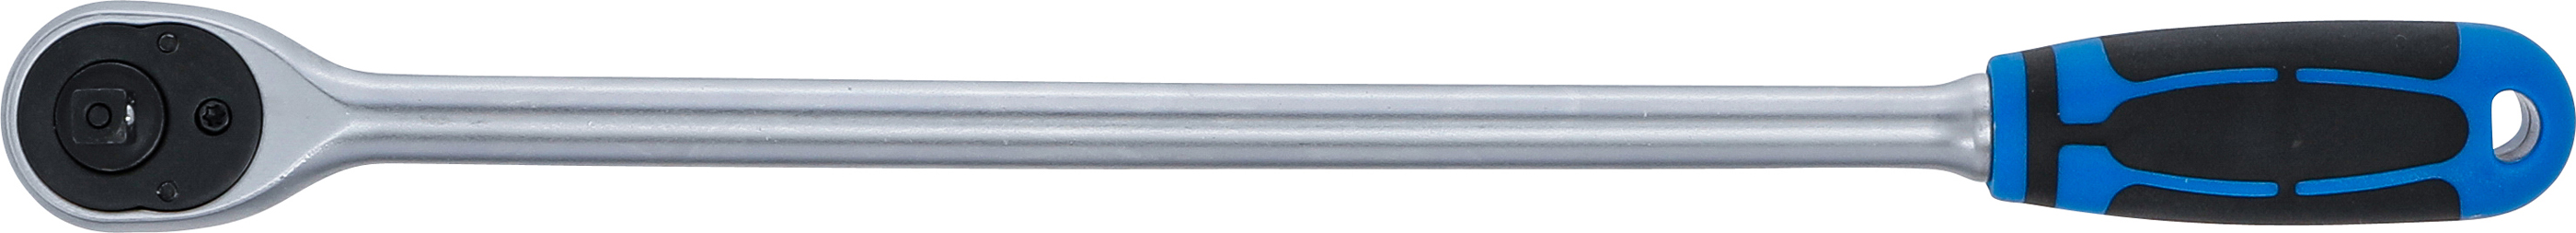 BGS Umschaltknarre | extra lang | Abtrieb Außenvierkant 6,3 mm (1/4") | 300 mm